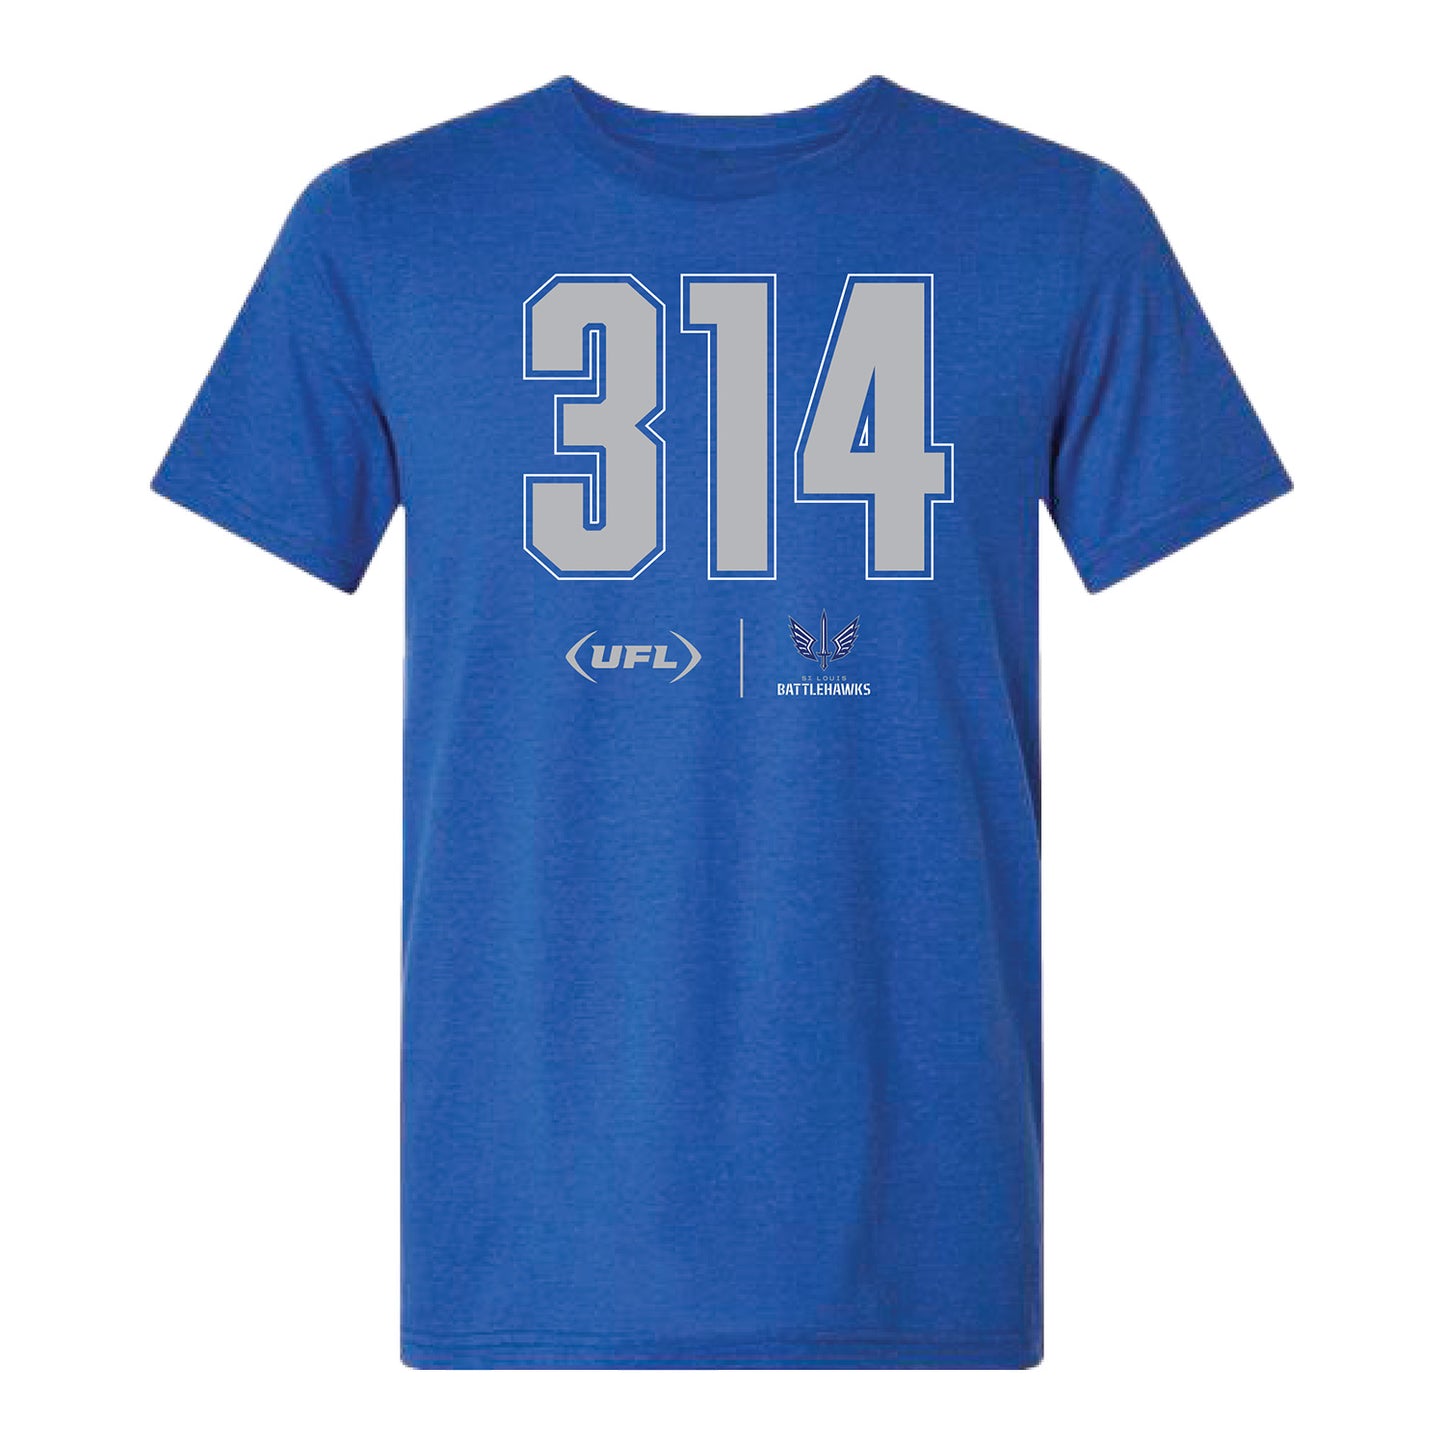 St. Louis Battlehawks Area Code T-Shirt In Blue - Front View